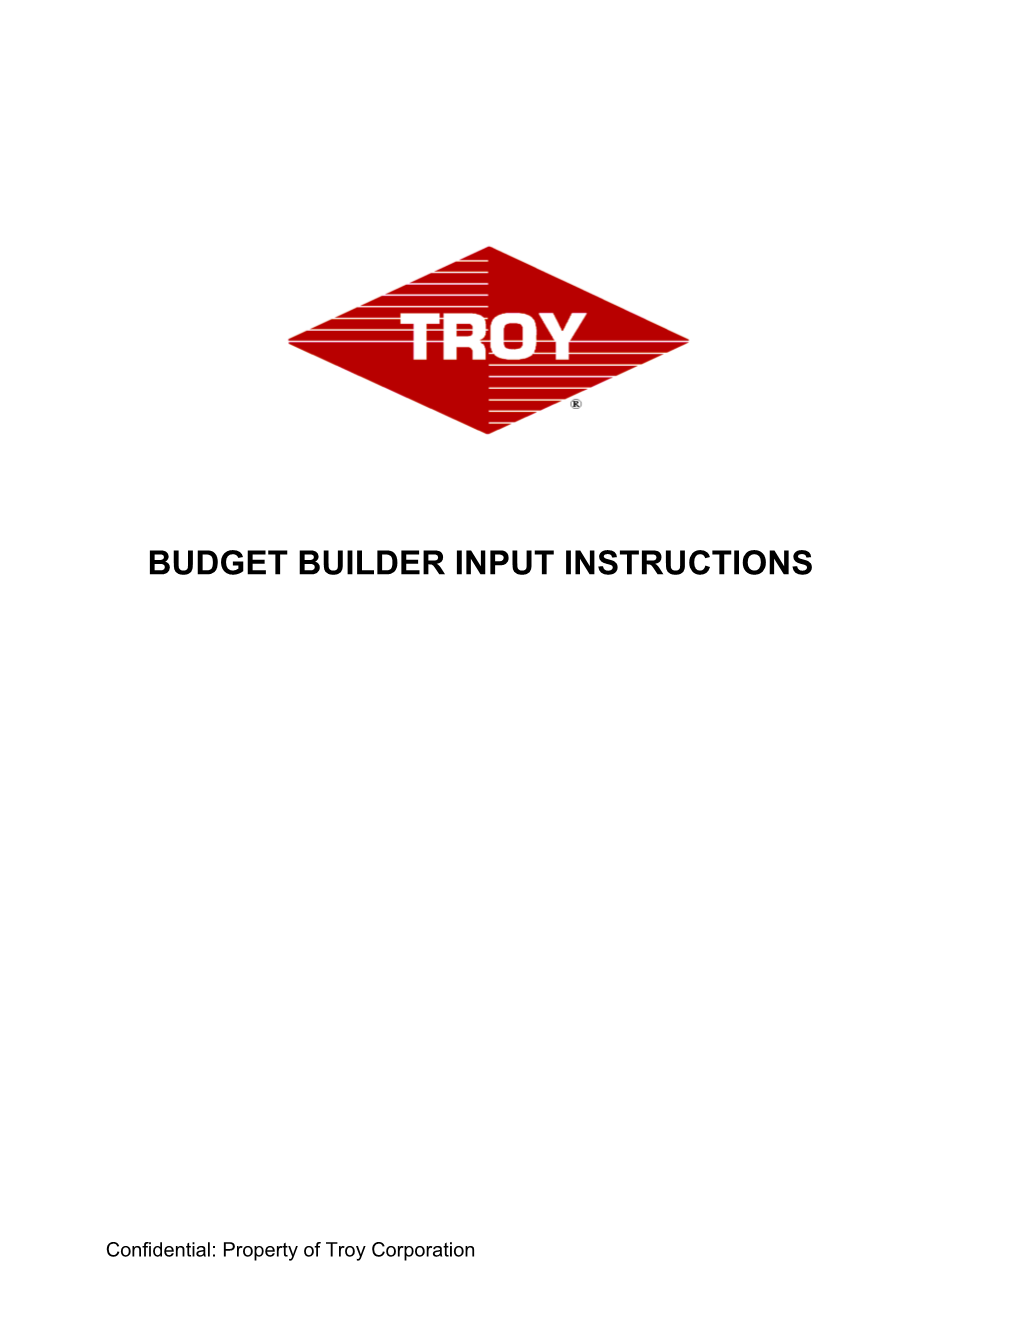 Budget Builder Instructions